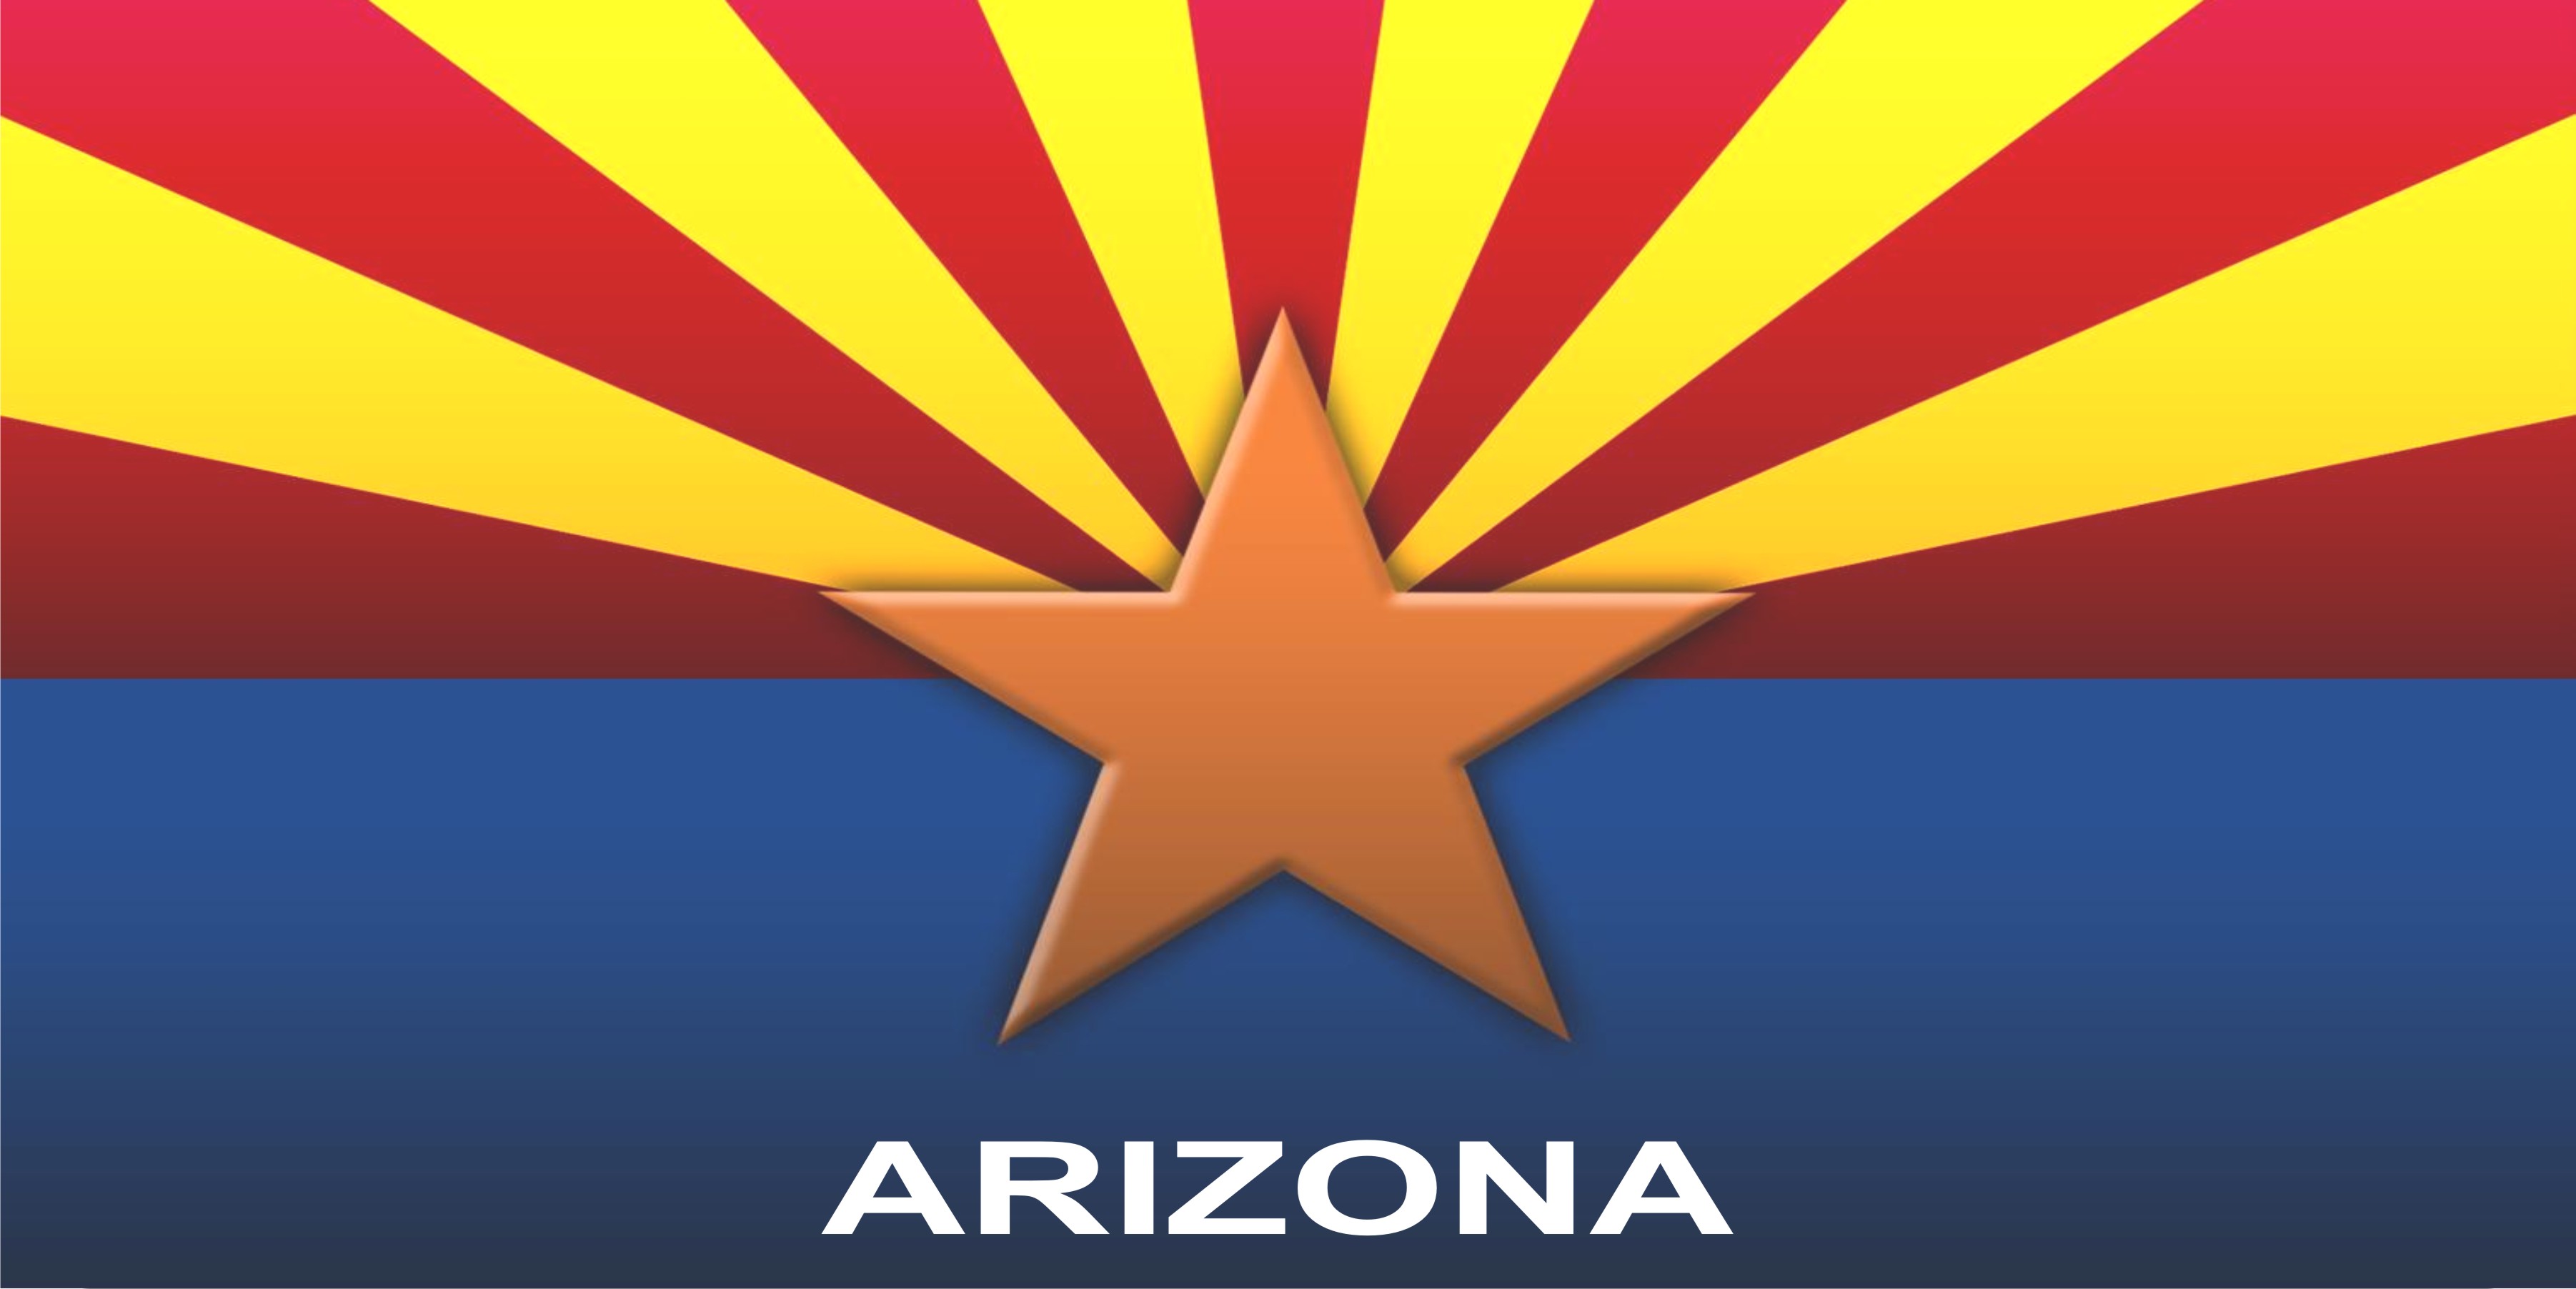 Arizona State FLAG Arizona Photo License Plate  Free Personalization on this Plate